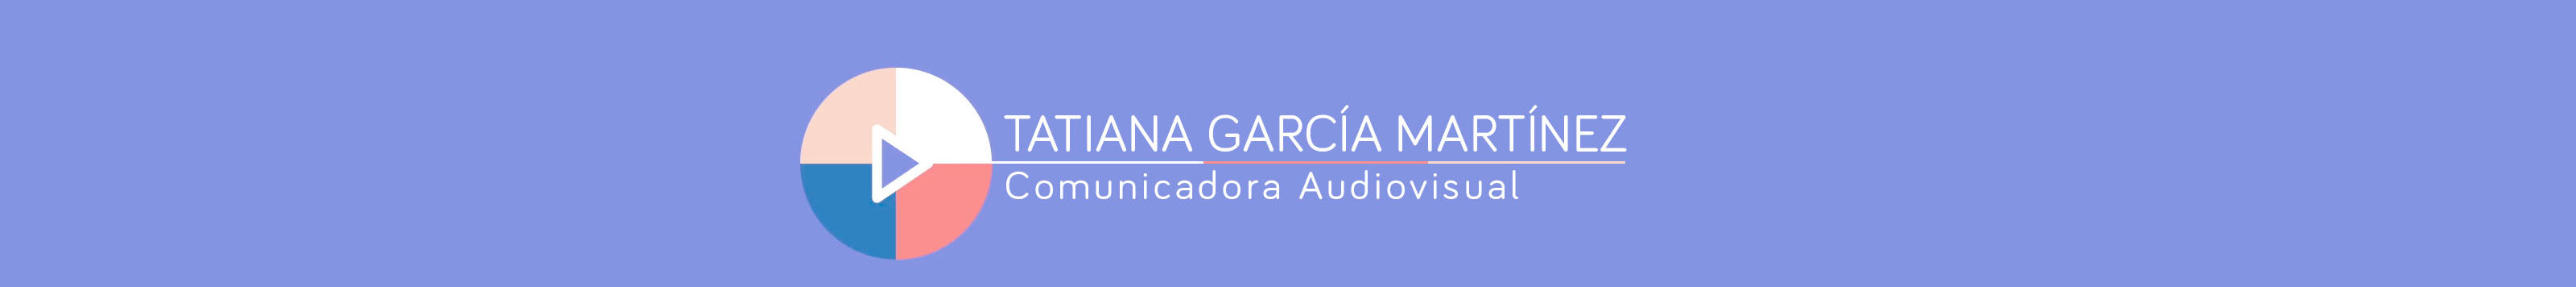 Tatiana García Martínez's profile banner